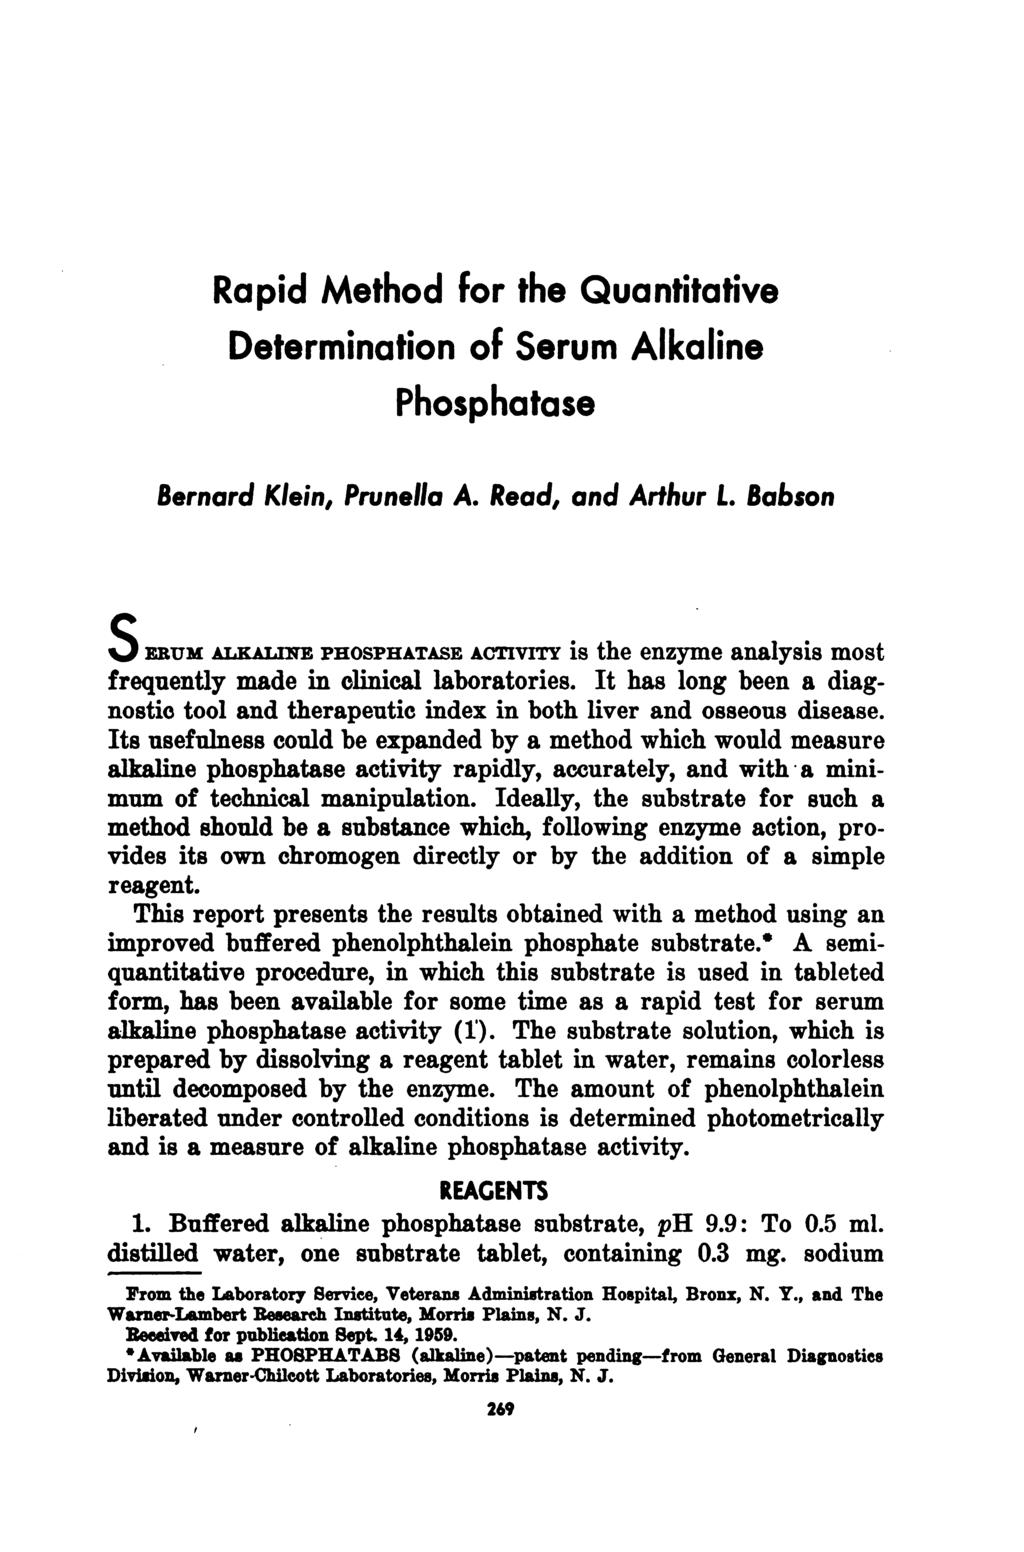 Rapid Method for the Quantitative Determination of Serum Alkaline Phosphatase Bernard Klein, Prunella A. Read, and Arthur L.